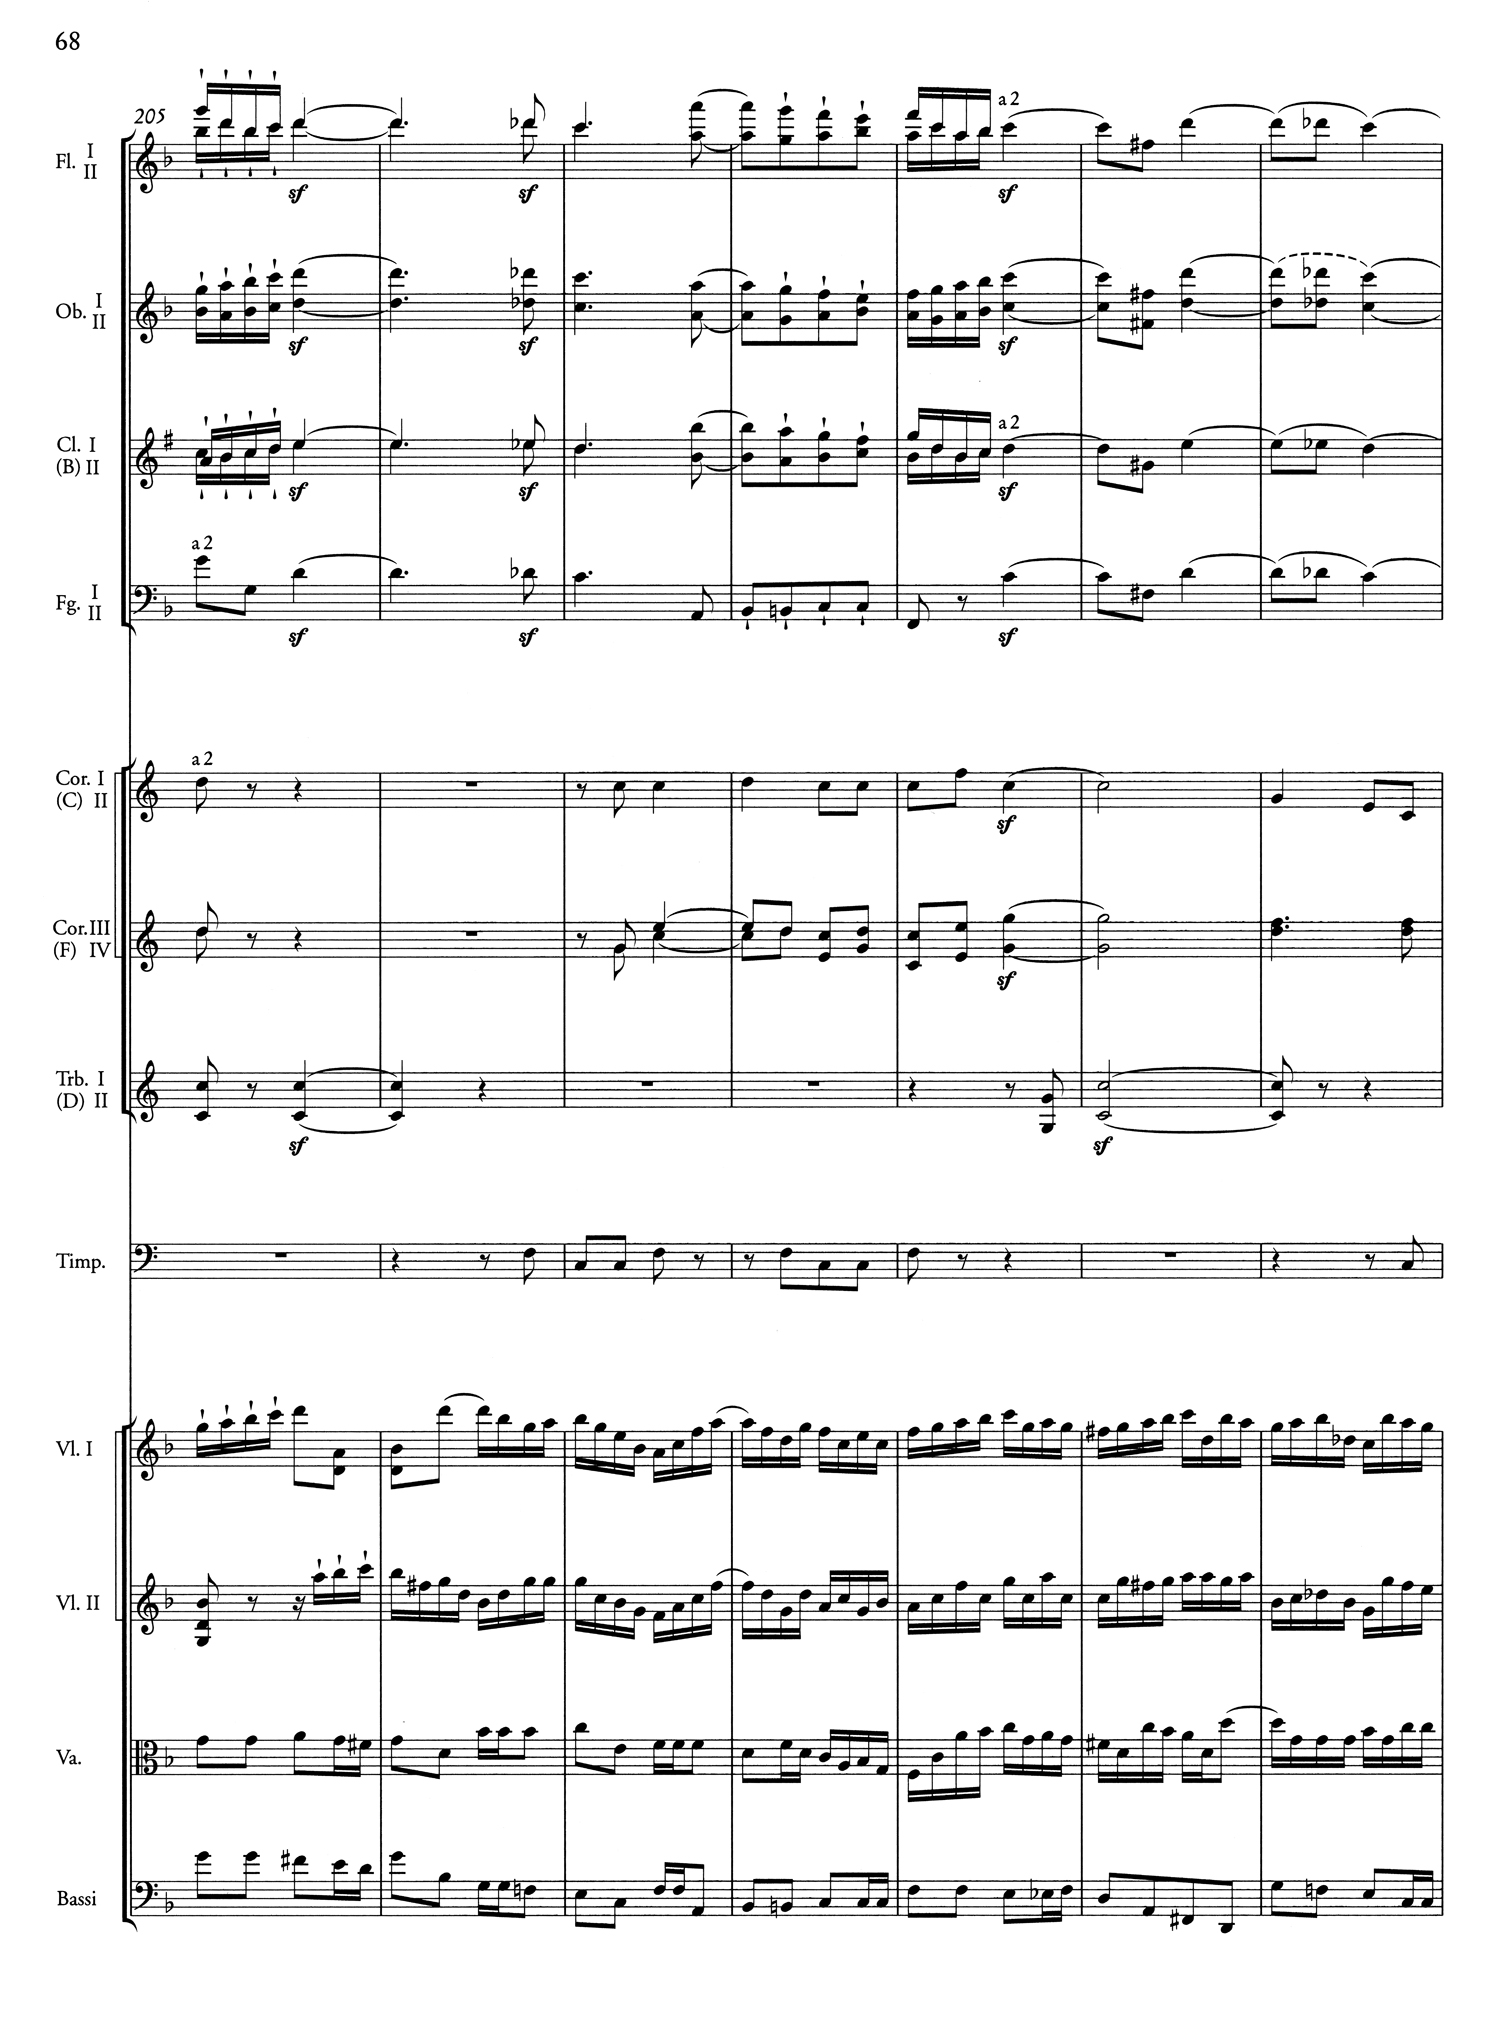 Mendelssohn Score 2 Page 4.jpg